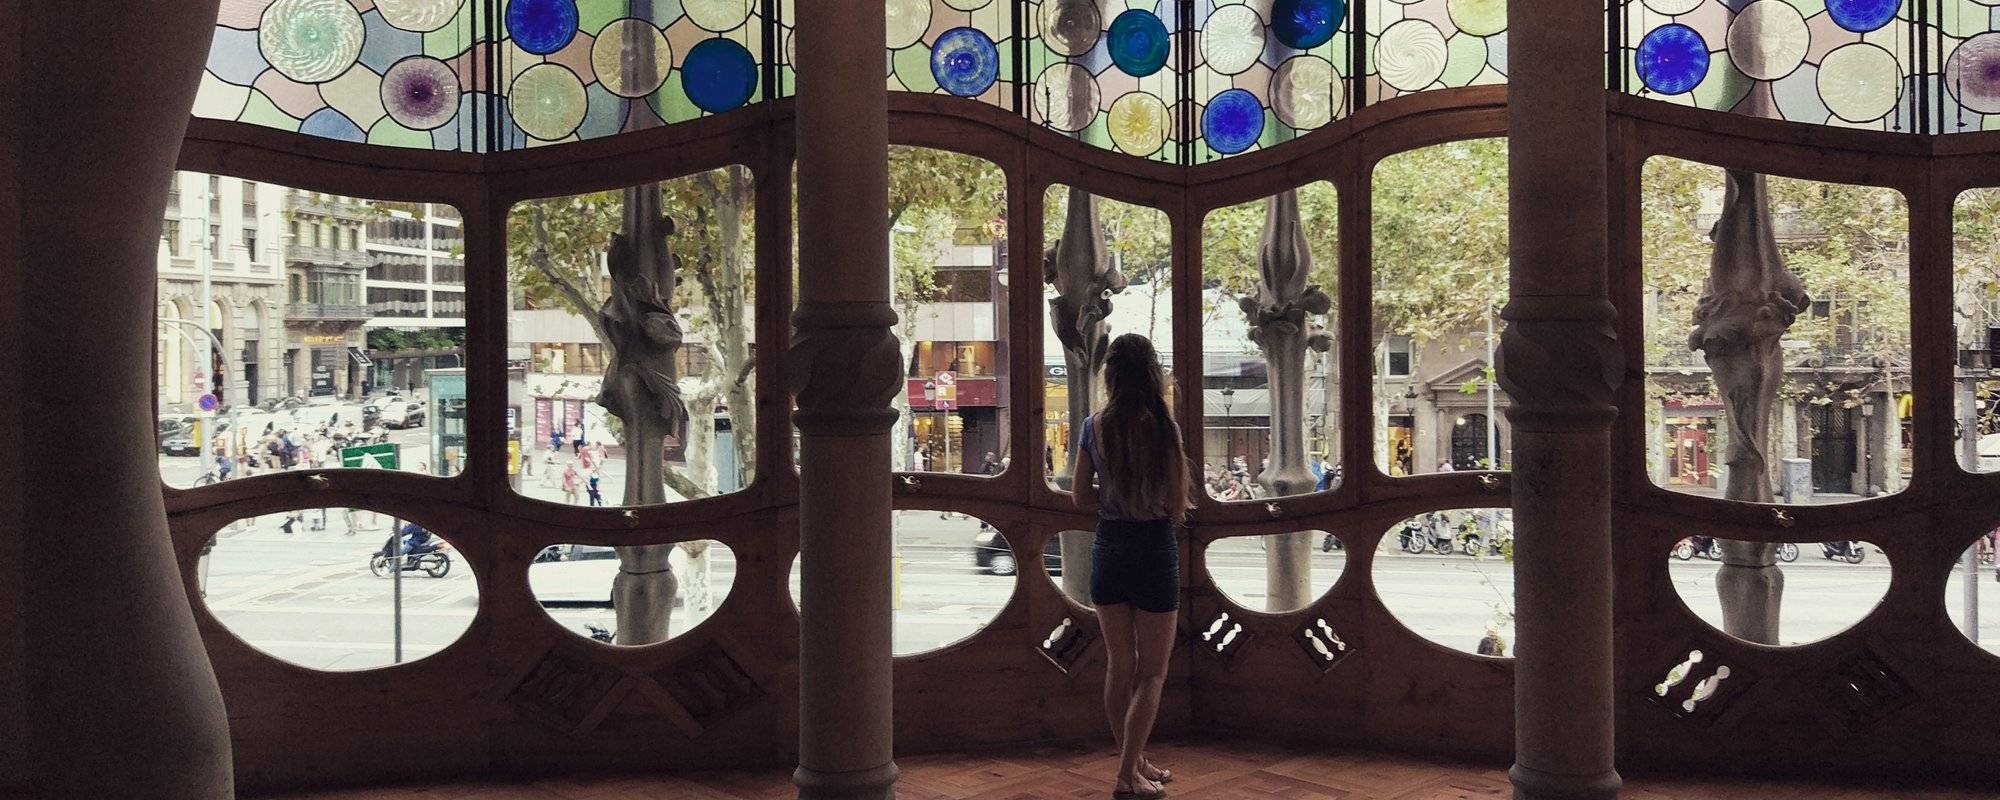 Travel in the footsteps of Antoni Gaudi #1 - Casa Batlló